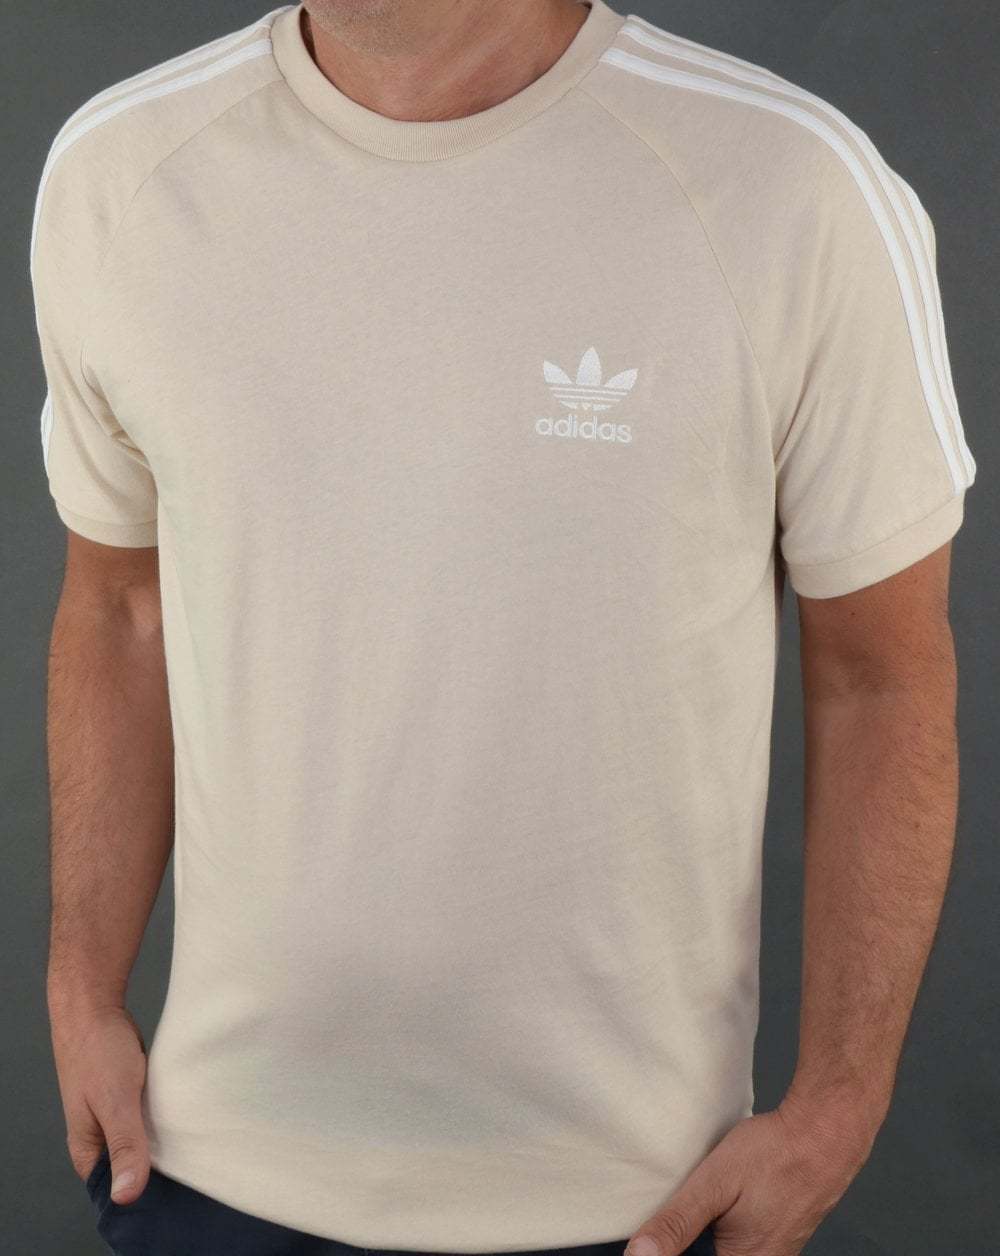 Adidas Originals Men's Stripes Tee T-shirt Crew Neck Short Sleeve Be